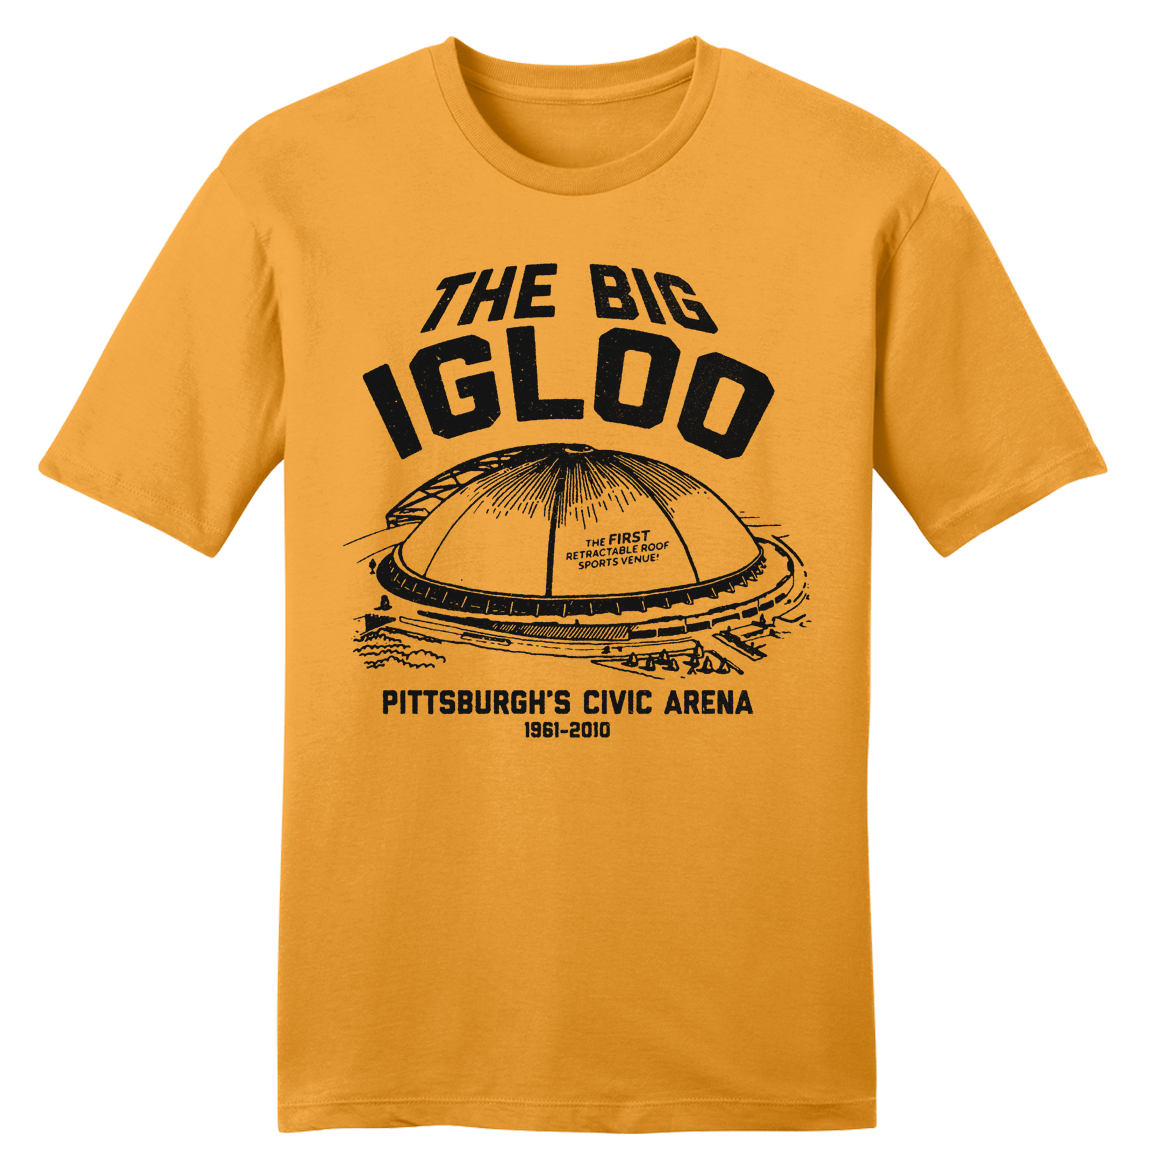 Civic Arena "The Big Igloo"